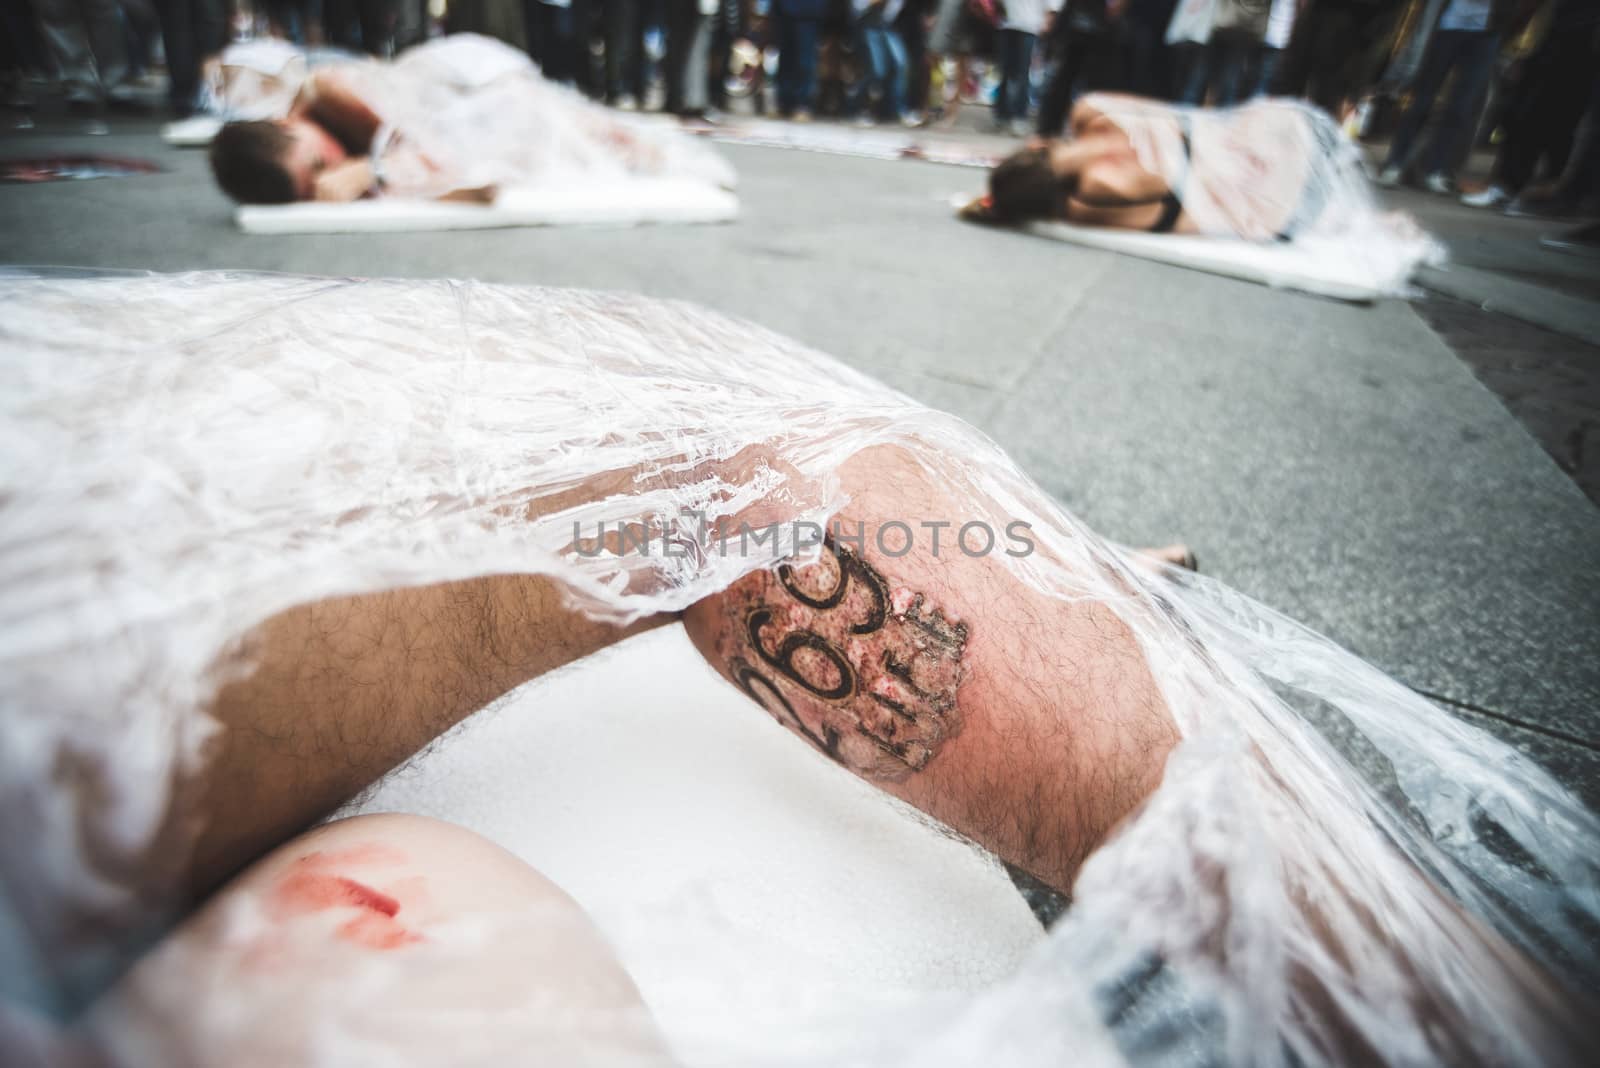 269 life manifestation in Milan on September, 26 2013 by peus